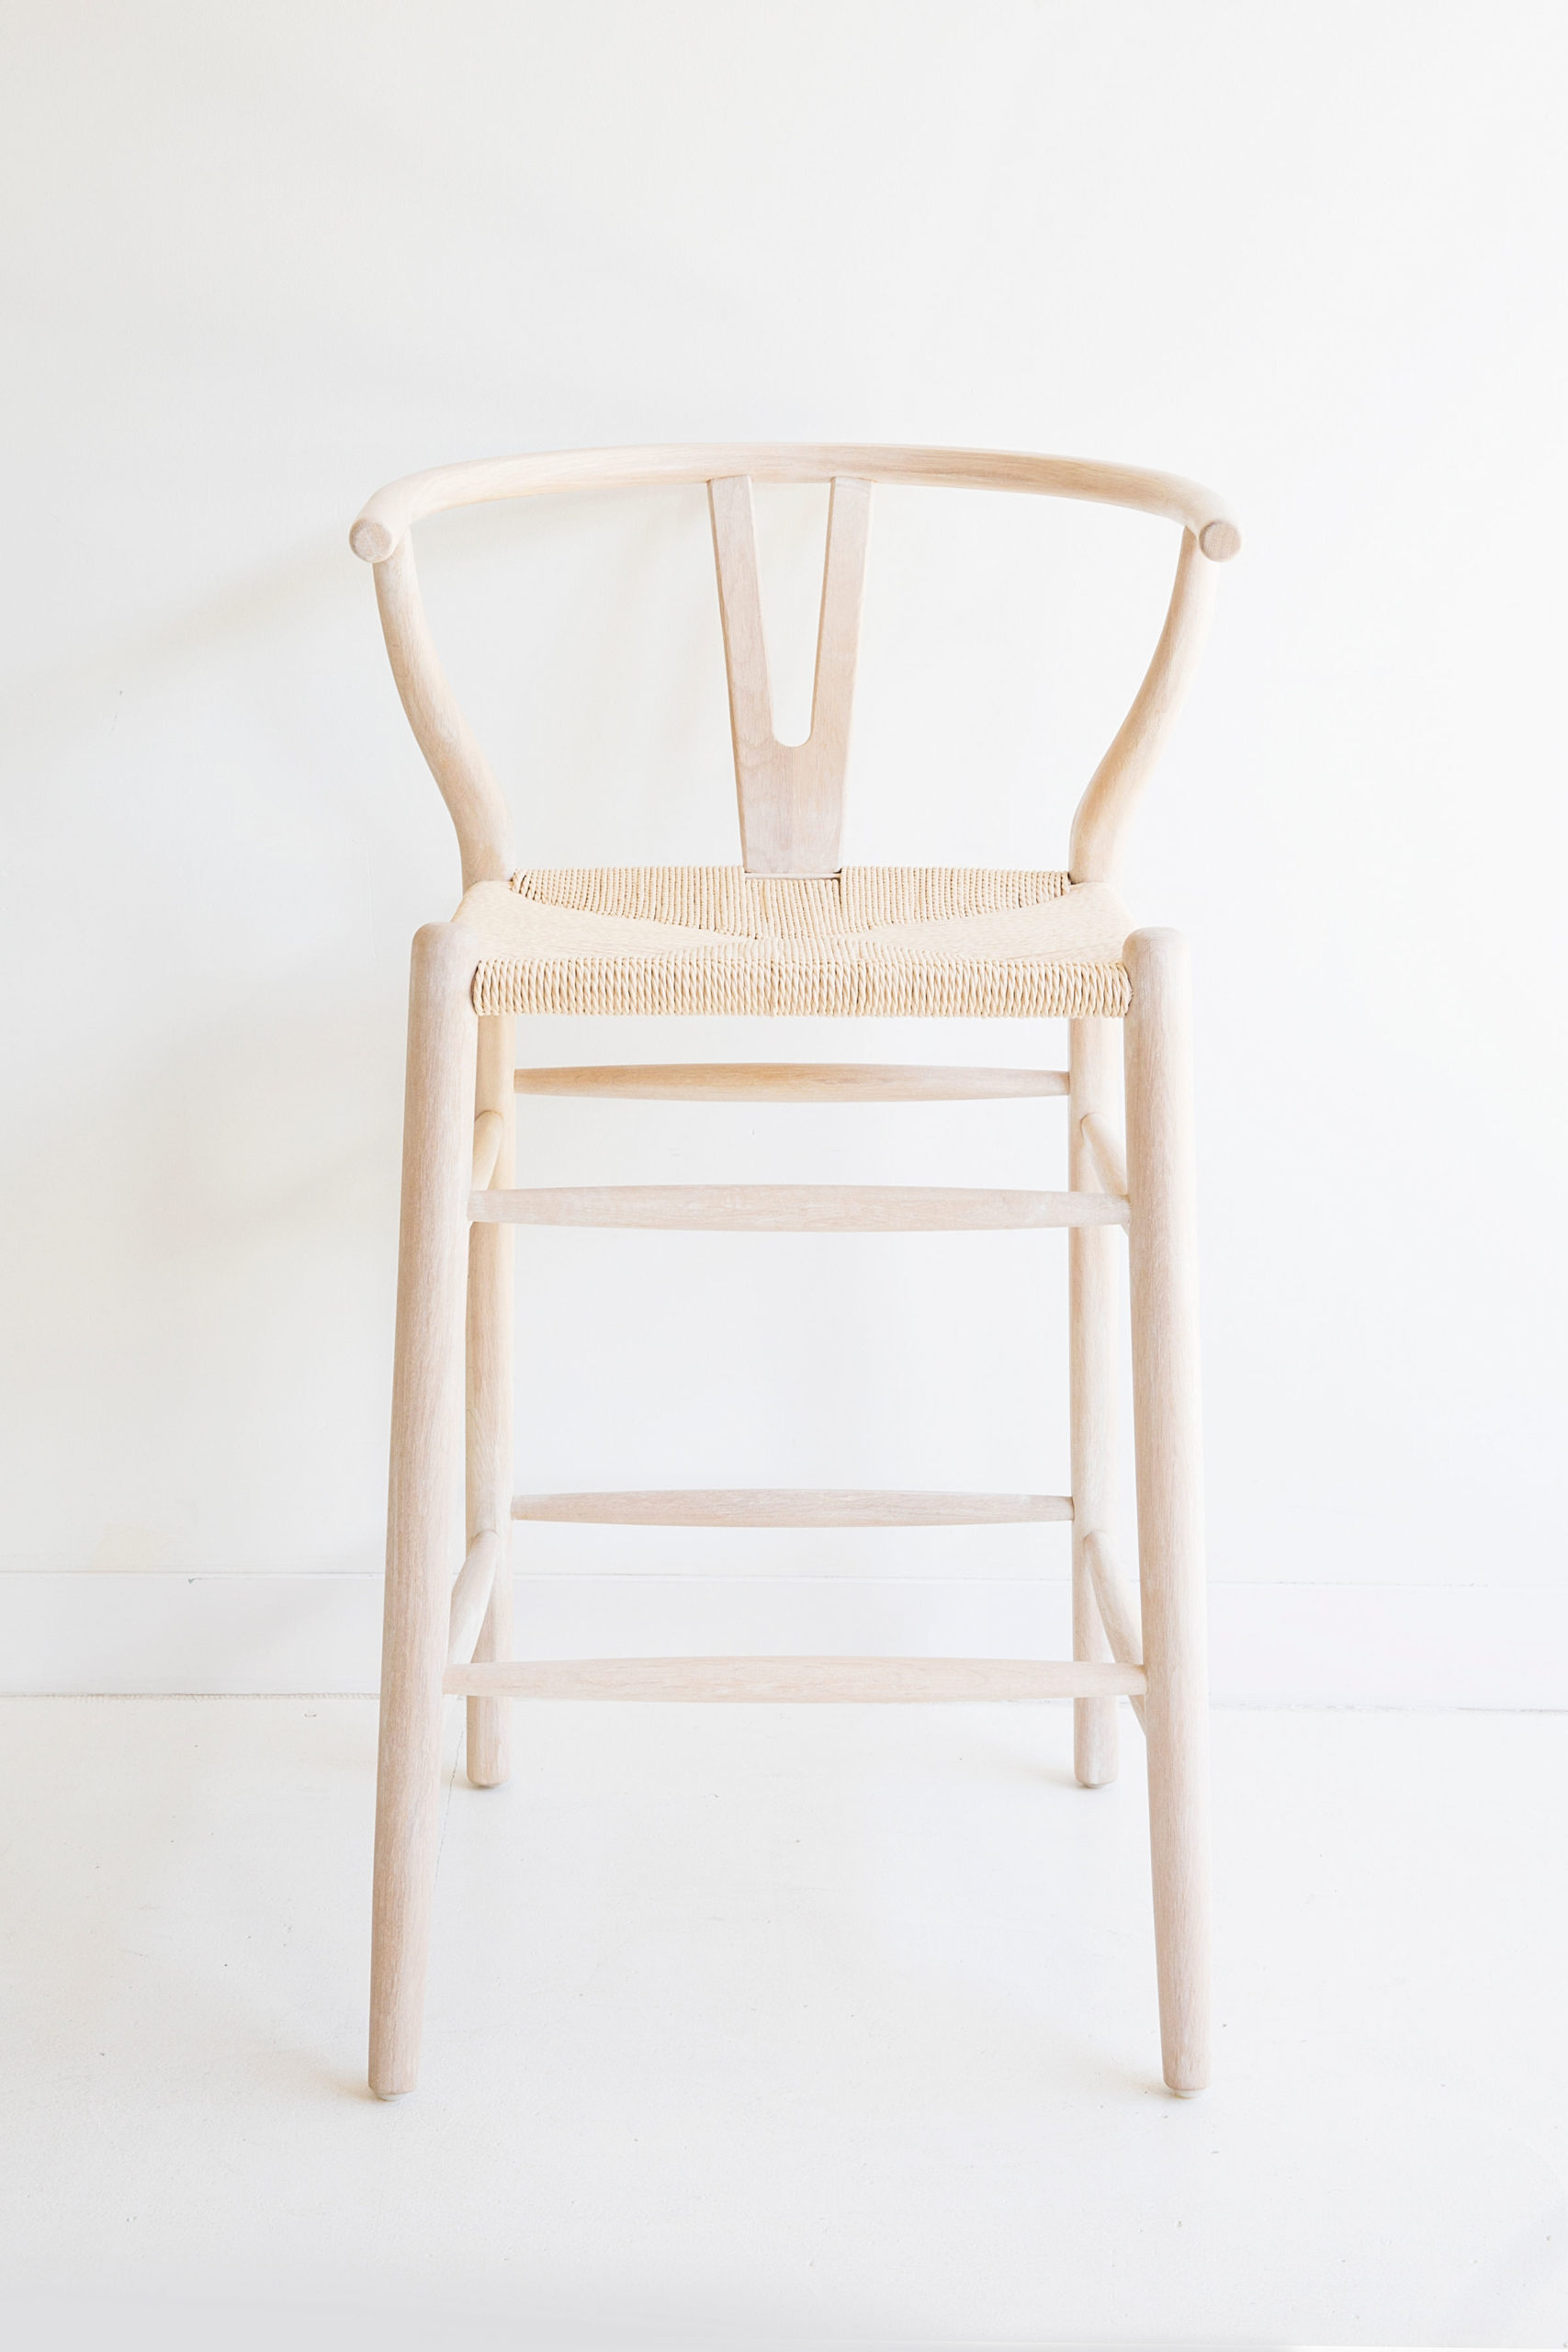 Featured image of post White Coastal Bar Stools - Buy bar stools online at australia&#039;s no.1 online destination for kitchen bar stools &amp; wooden bar stools.